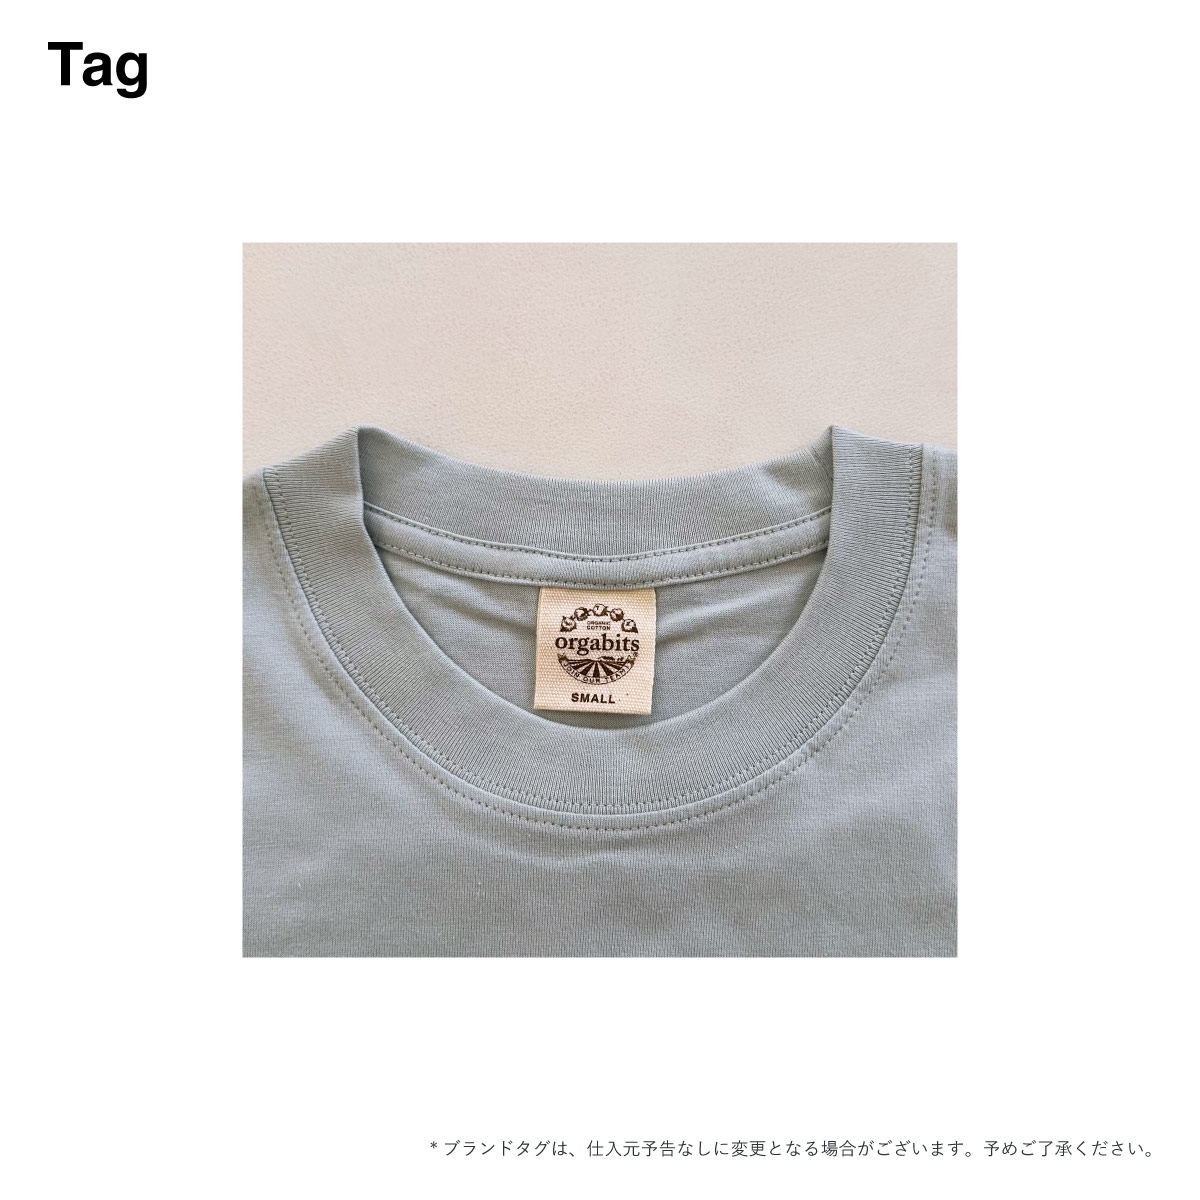 TRUSS トラス 5.3 oz オーガニック コットン Tシャツ <キッズサイズ> (品番OGB-910-KIDS)